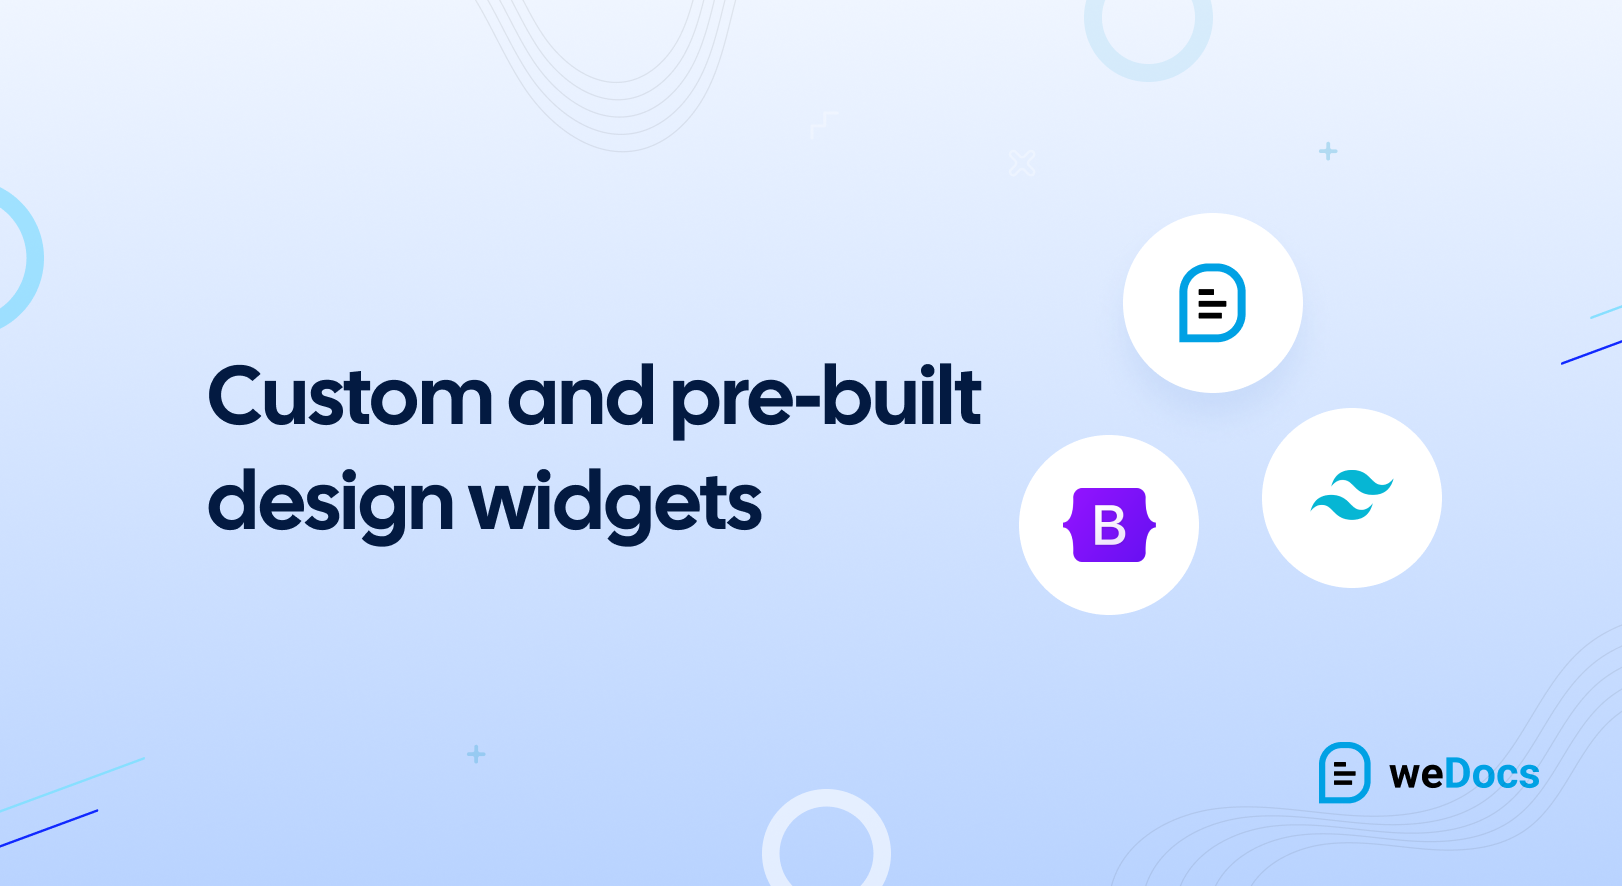 Custom and pre-built design widgets of weDocs